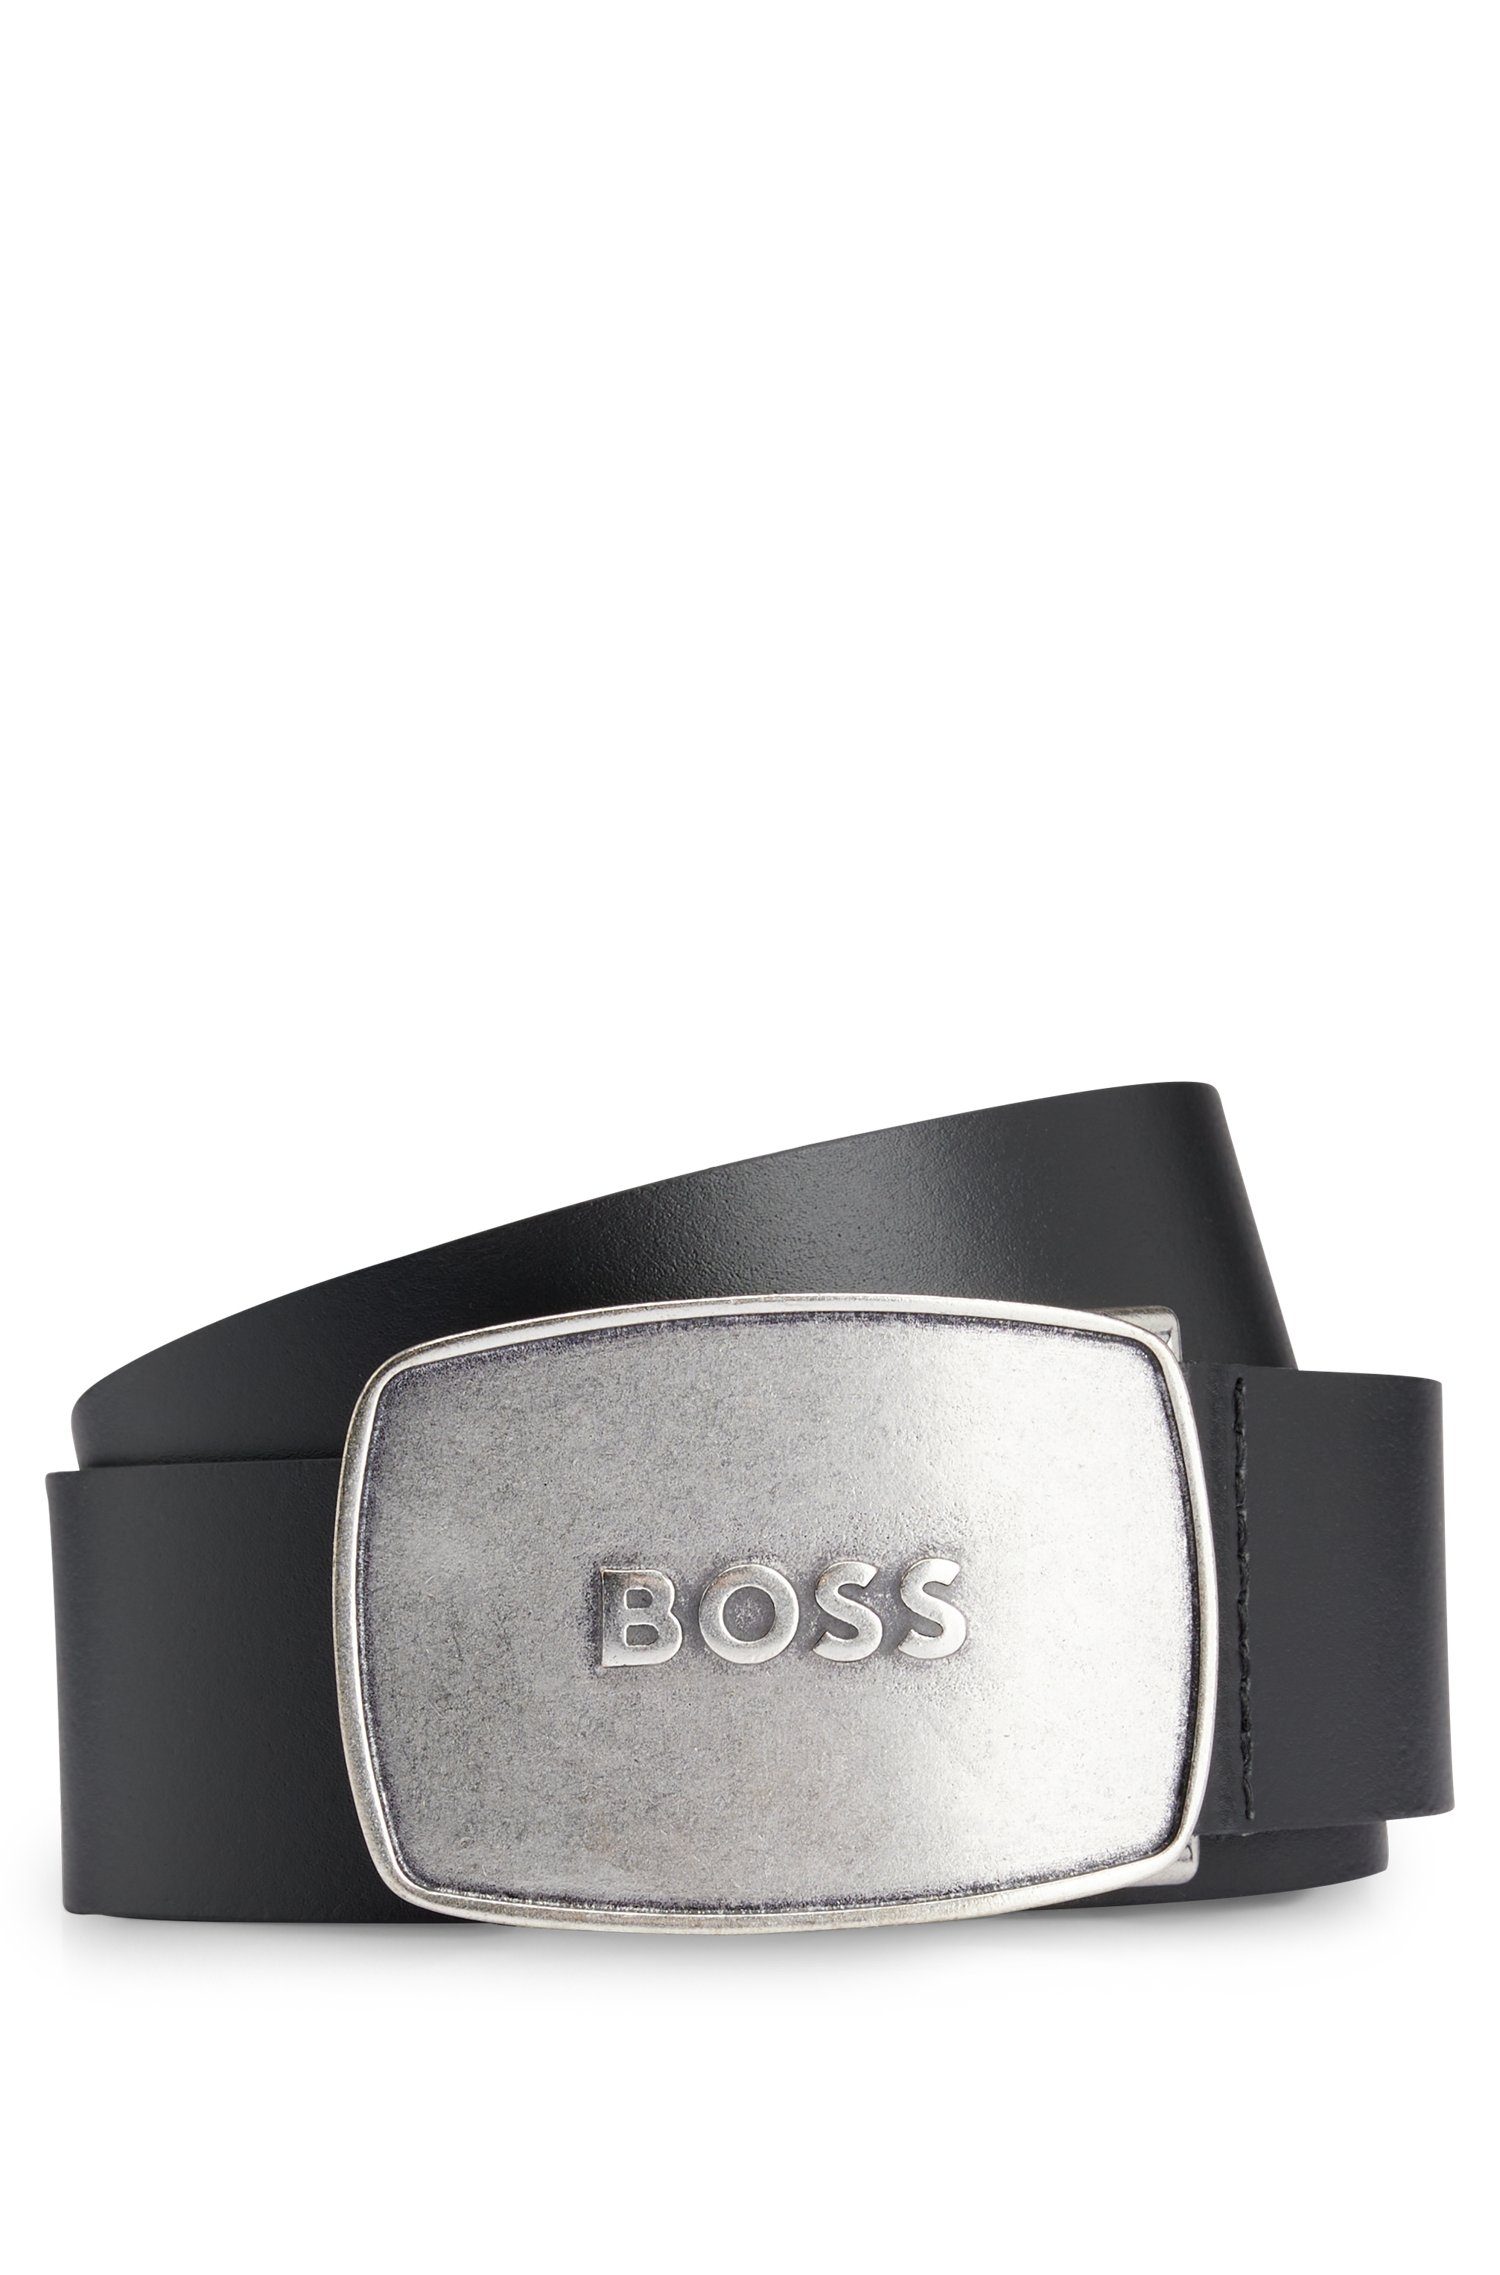 BOSS aus Logo-Schnalle Ledergürtel auffälliger Metall mit Boss_Icon-EP_Sz40